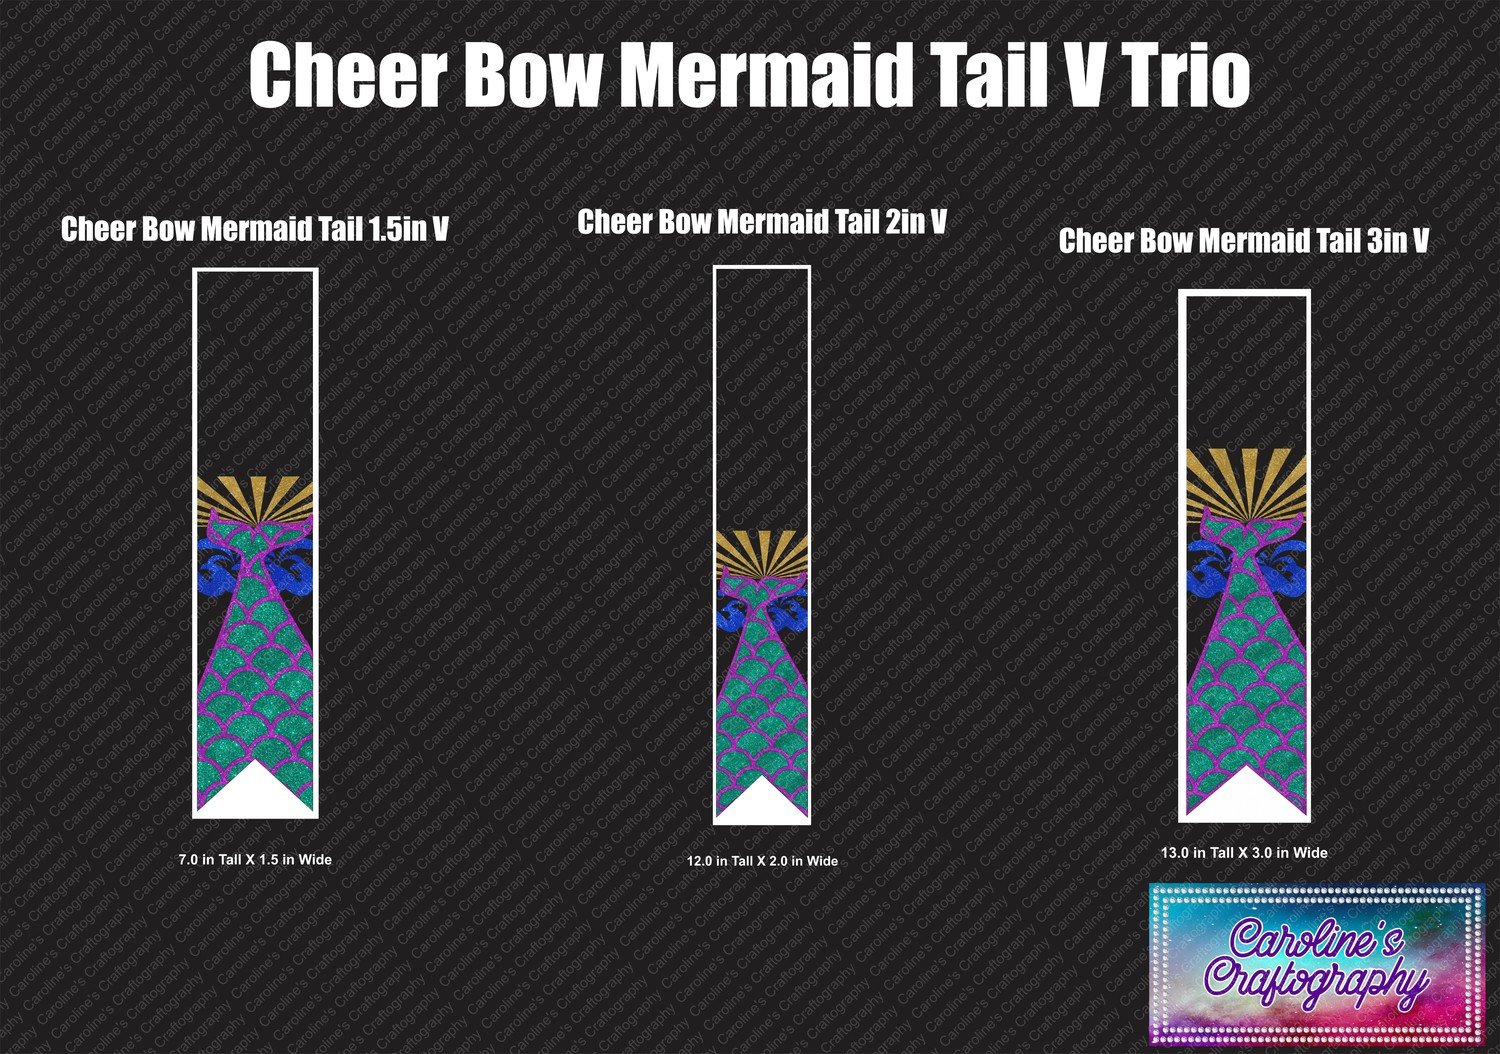 Cheer Bow Mermaid Tail Vinyl Trio